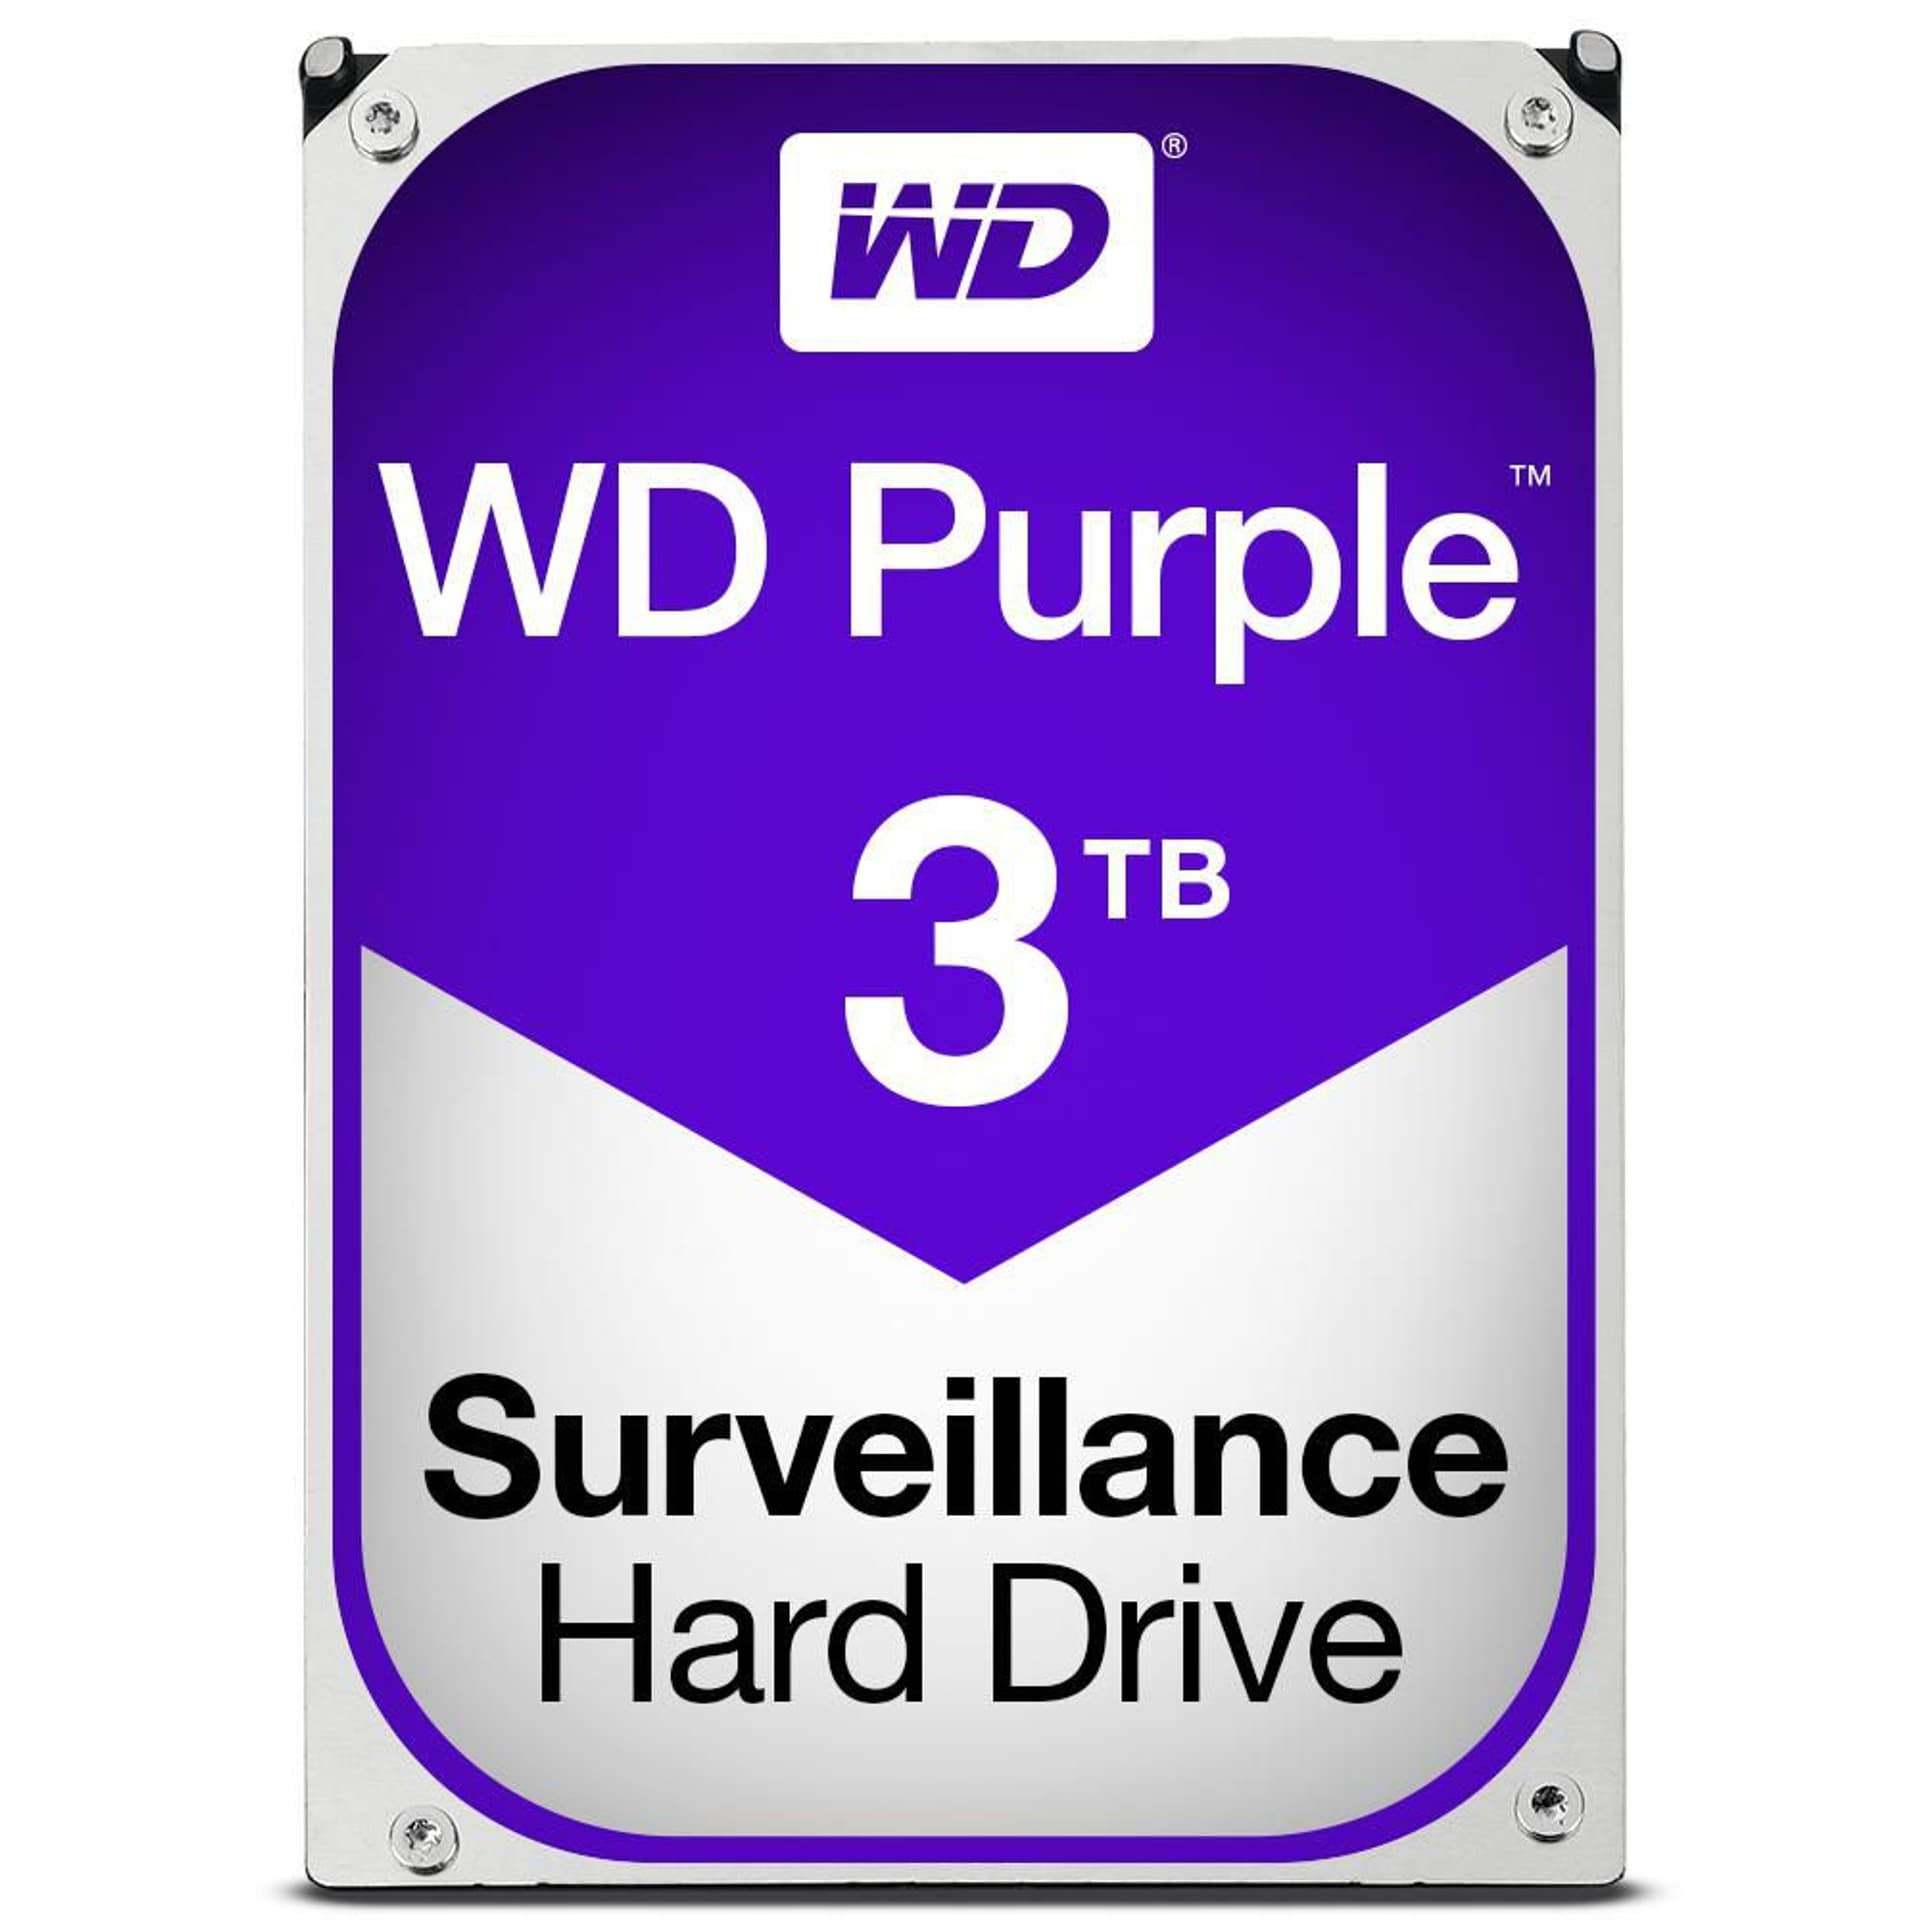 

Western Digital WD Purple 3TB 24x7